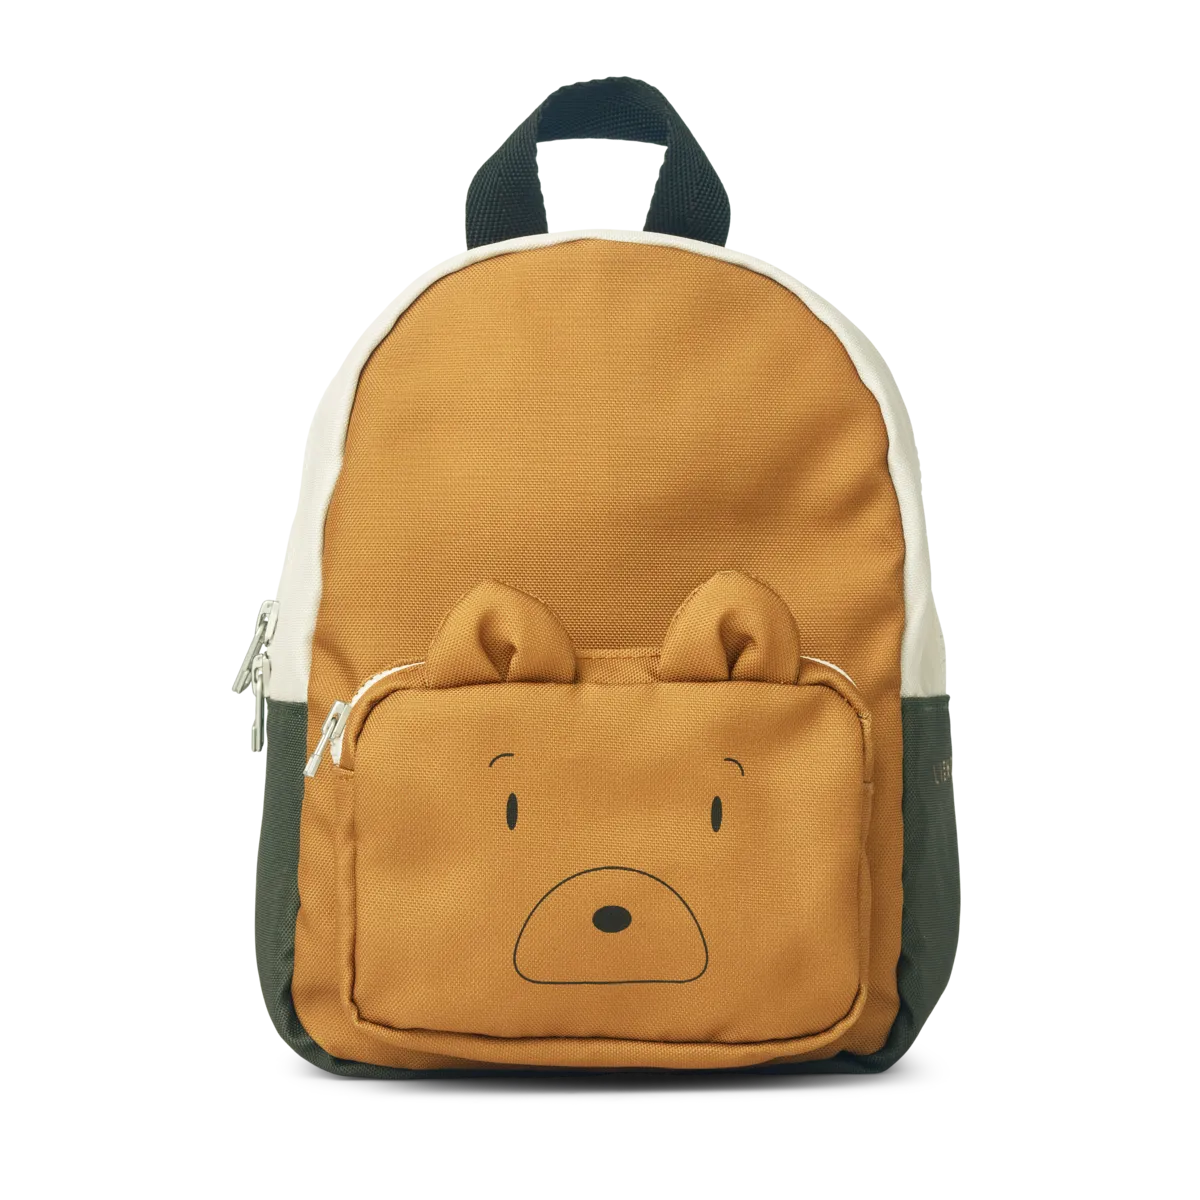 Saxo mini Backpack Mr bear golden caramel multi mix - LIEWOOD lw14920 1447 5715335003286